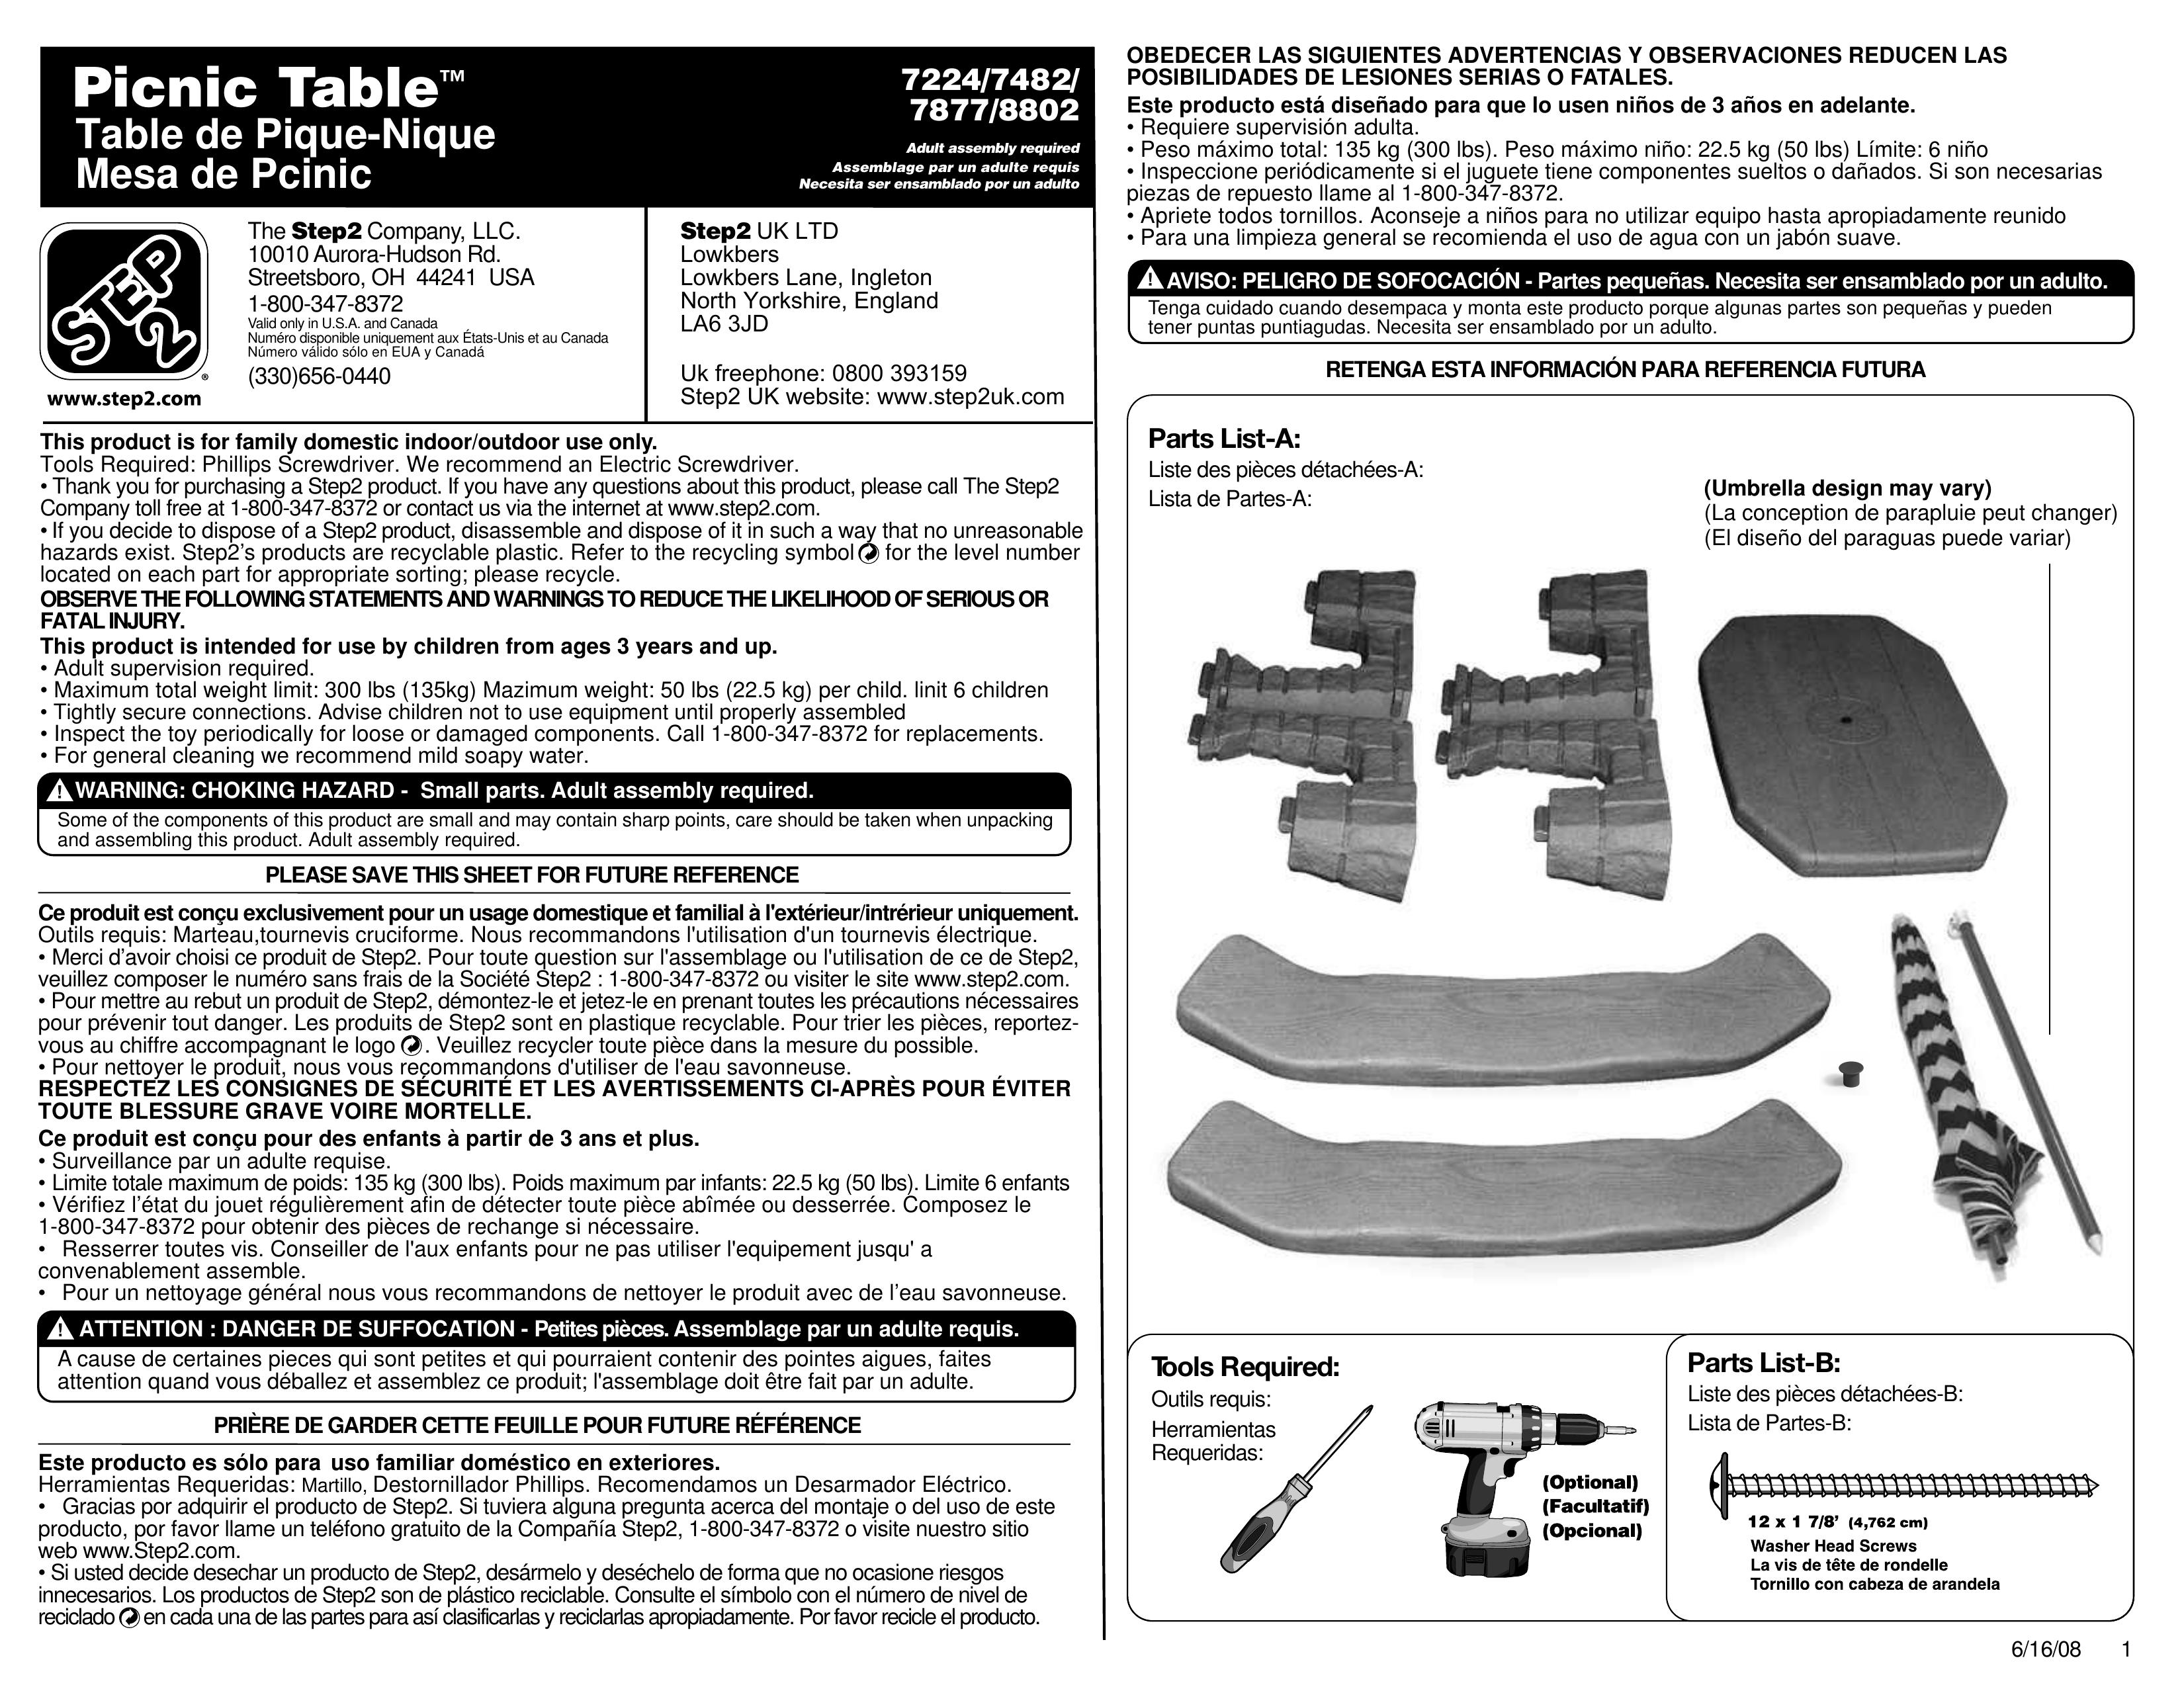 Step 2 8802 Picnic Table User Manual